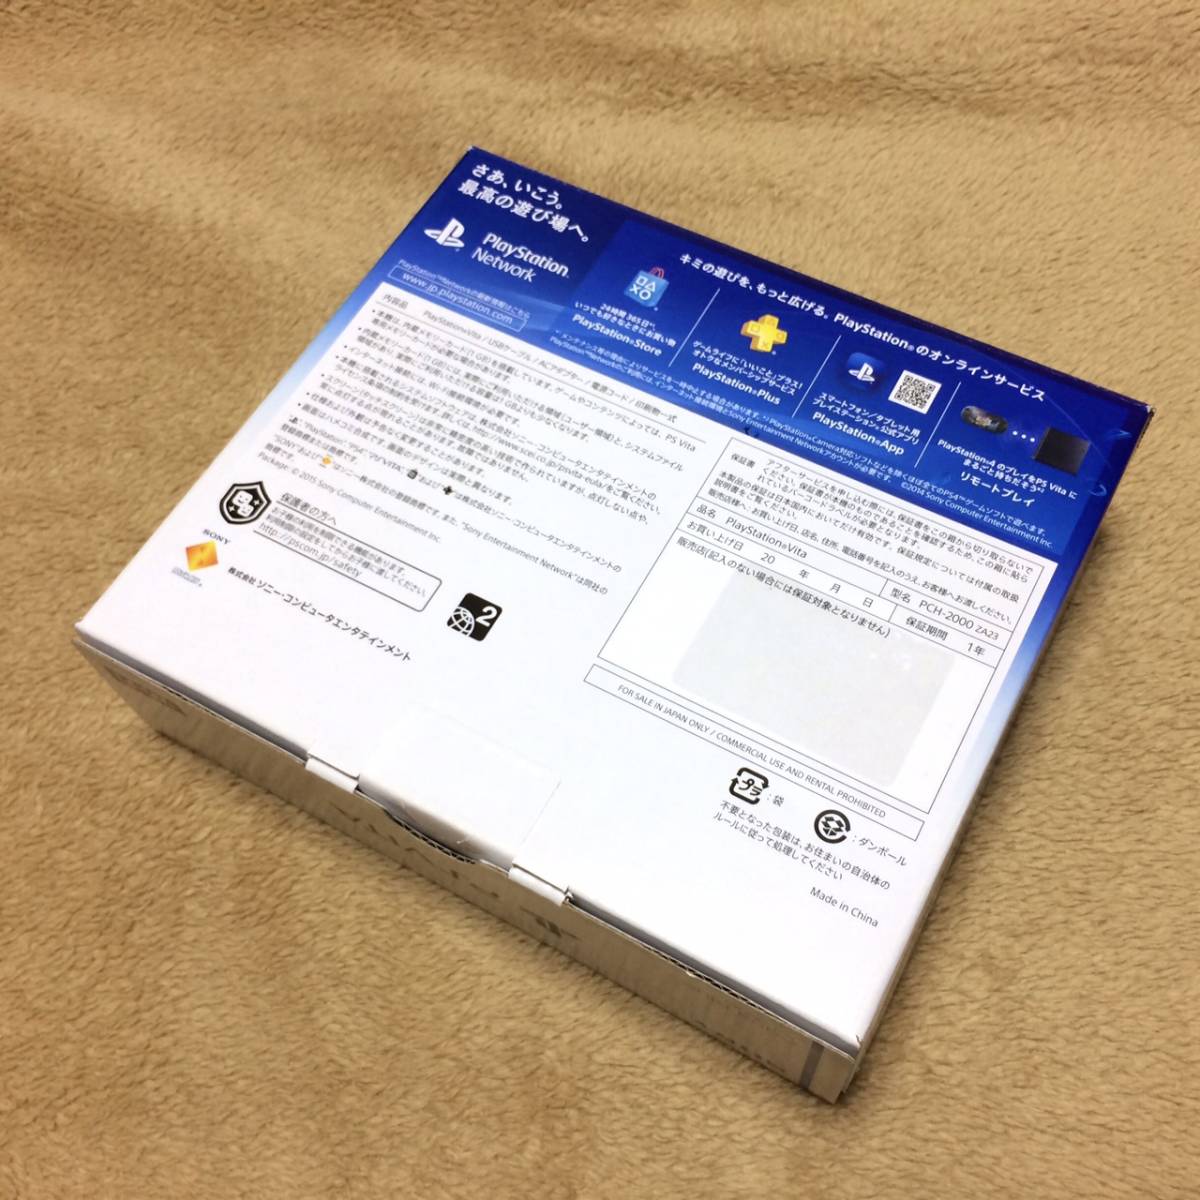 PS Vita『極美品・付属品完備』PCH-2000ZA23 アクアブルー Wi-Fiモデル 